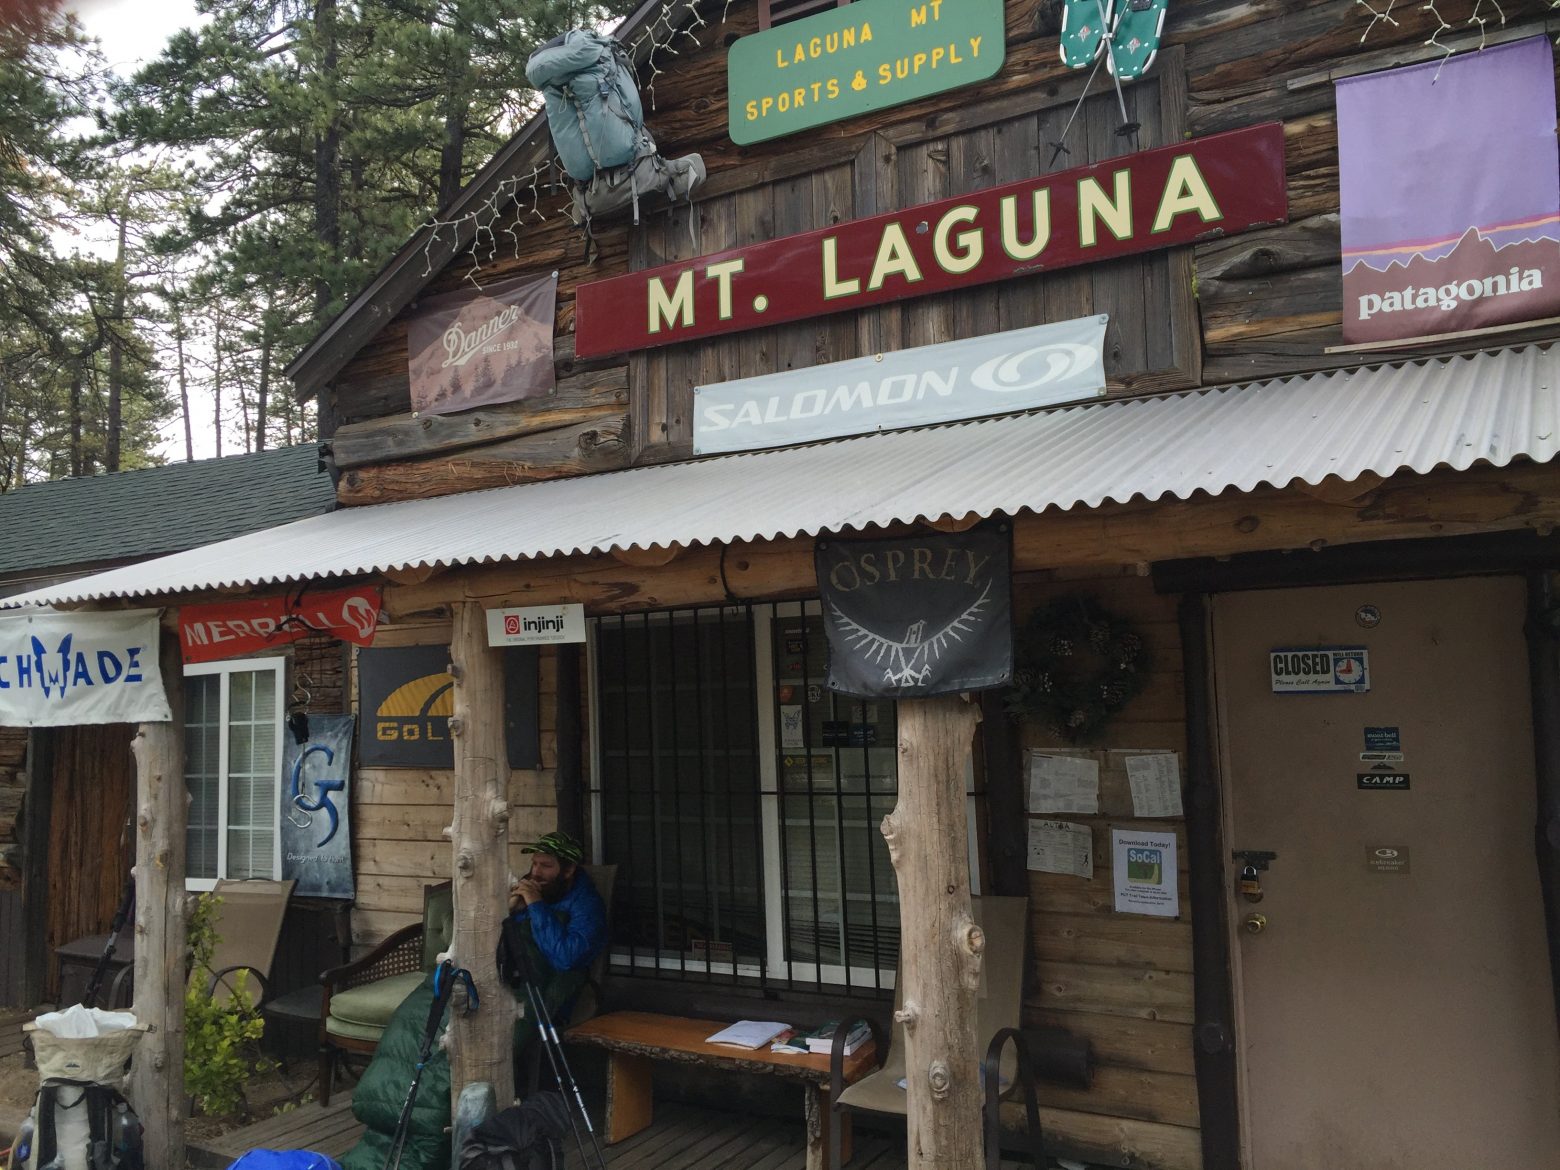 Mount Laguna Outfitter